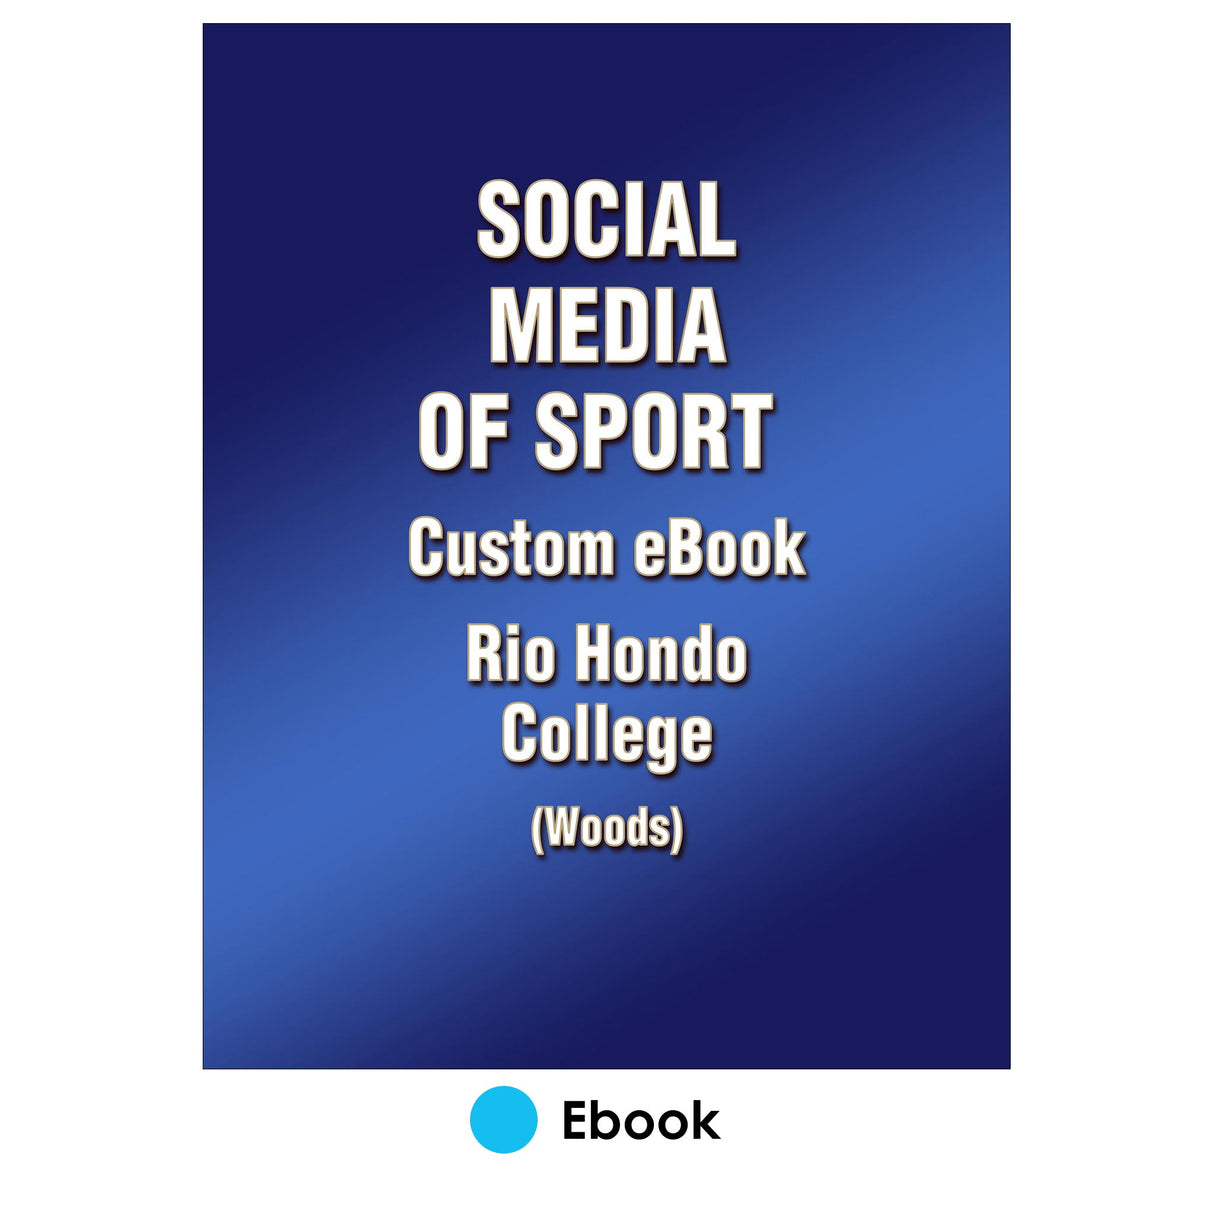 Social Media of Sport Custom Ebook: Rio Hondo College (Woods)